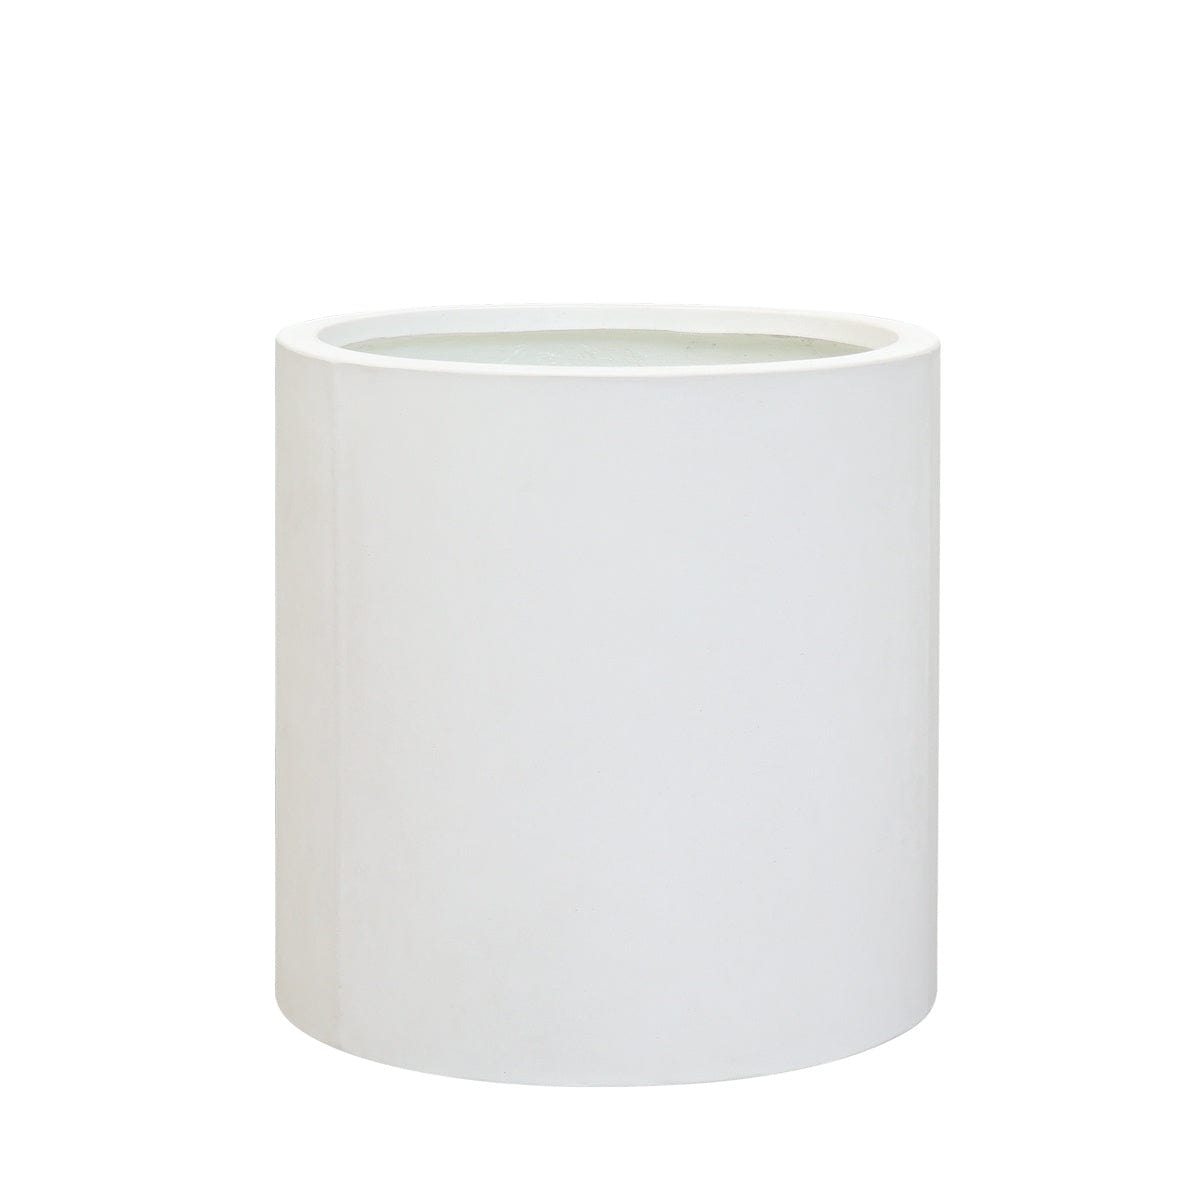 Mikonui Cylinder Planter Medium - White PRE ORDER Little & Fox